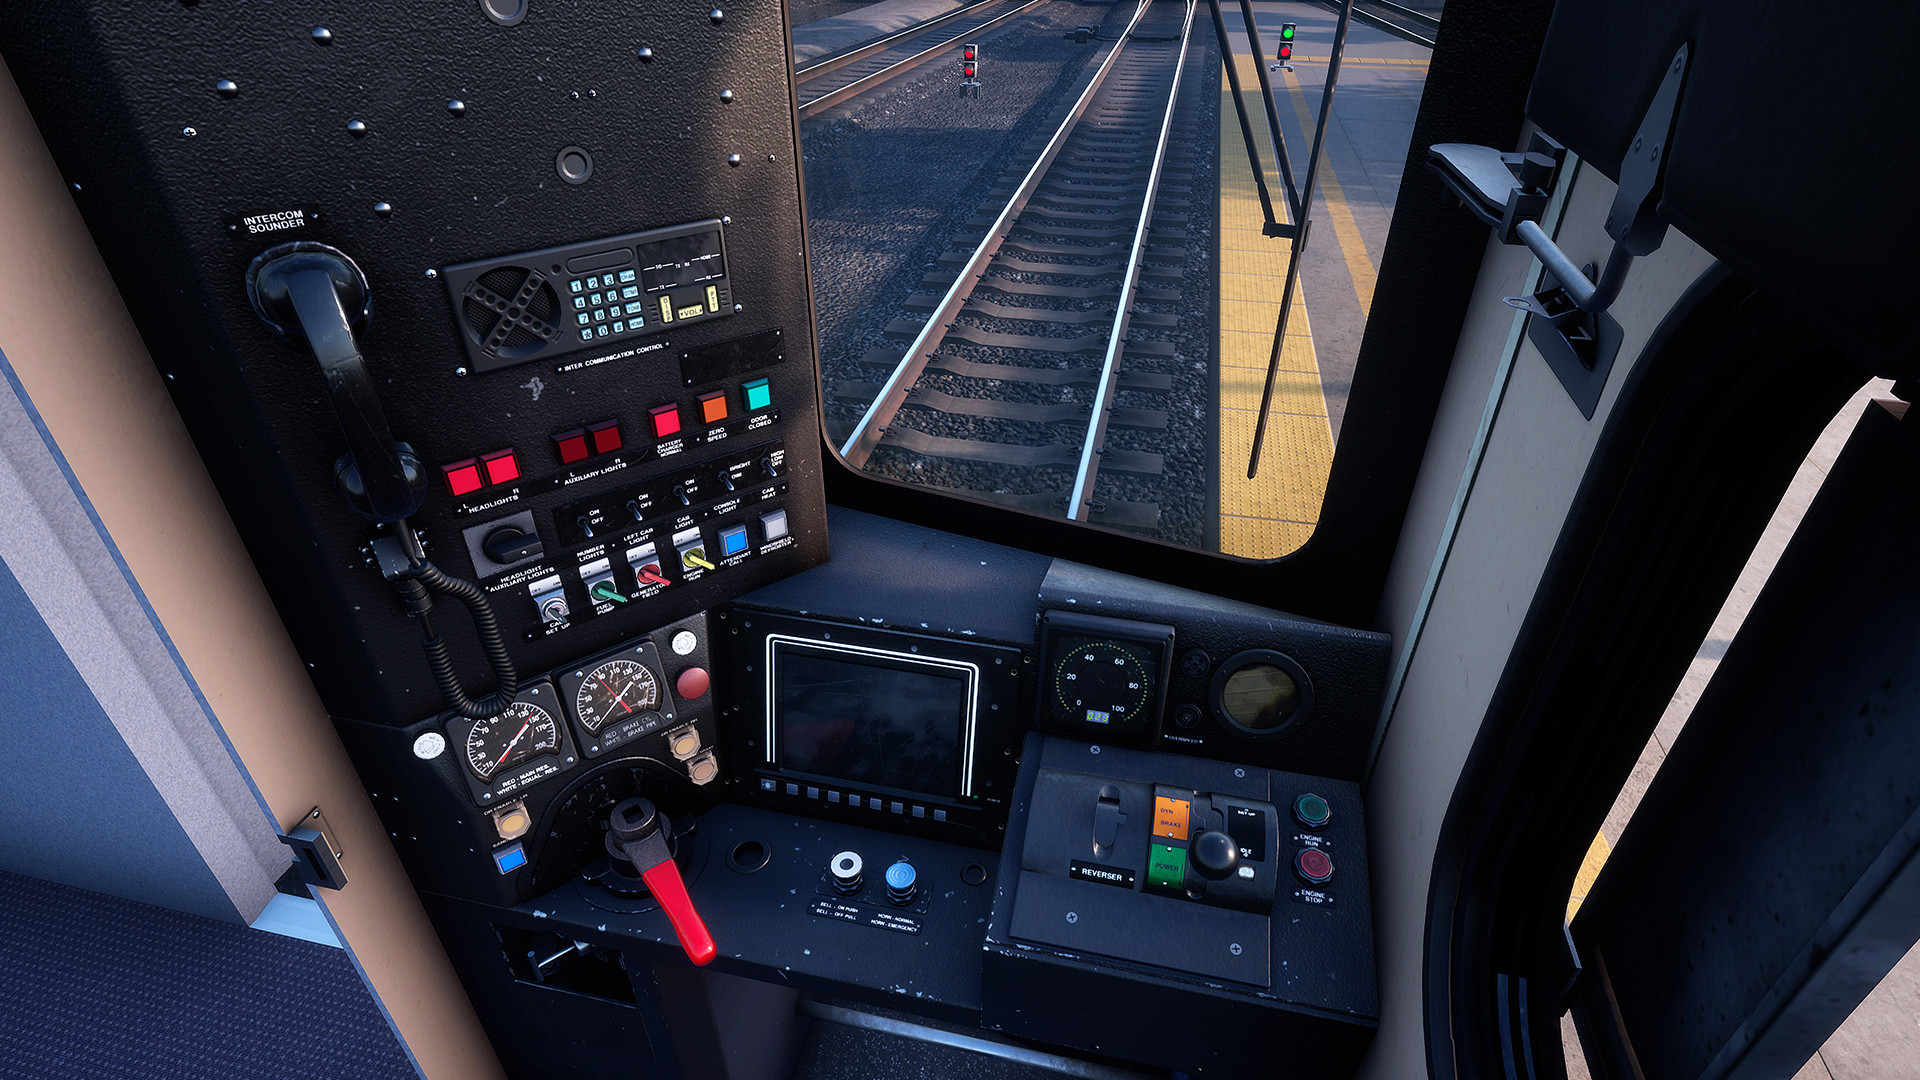 Train Sim World: Caltrain MP36PH-3C ‘Baby Bullet’ Loco Add-On screenshot